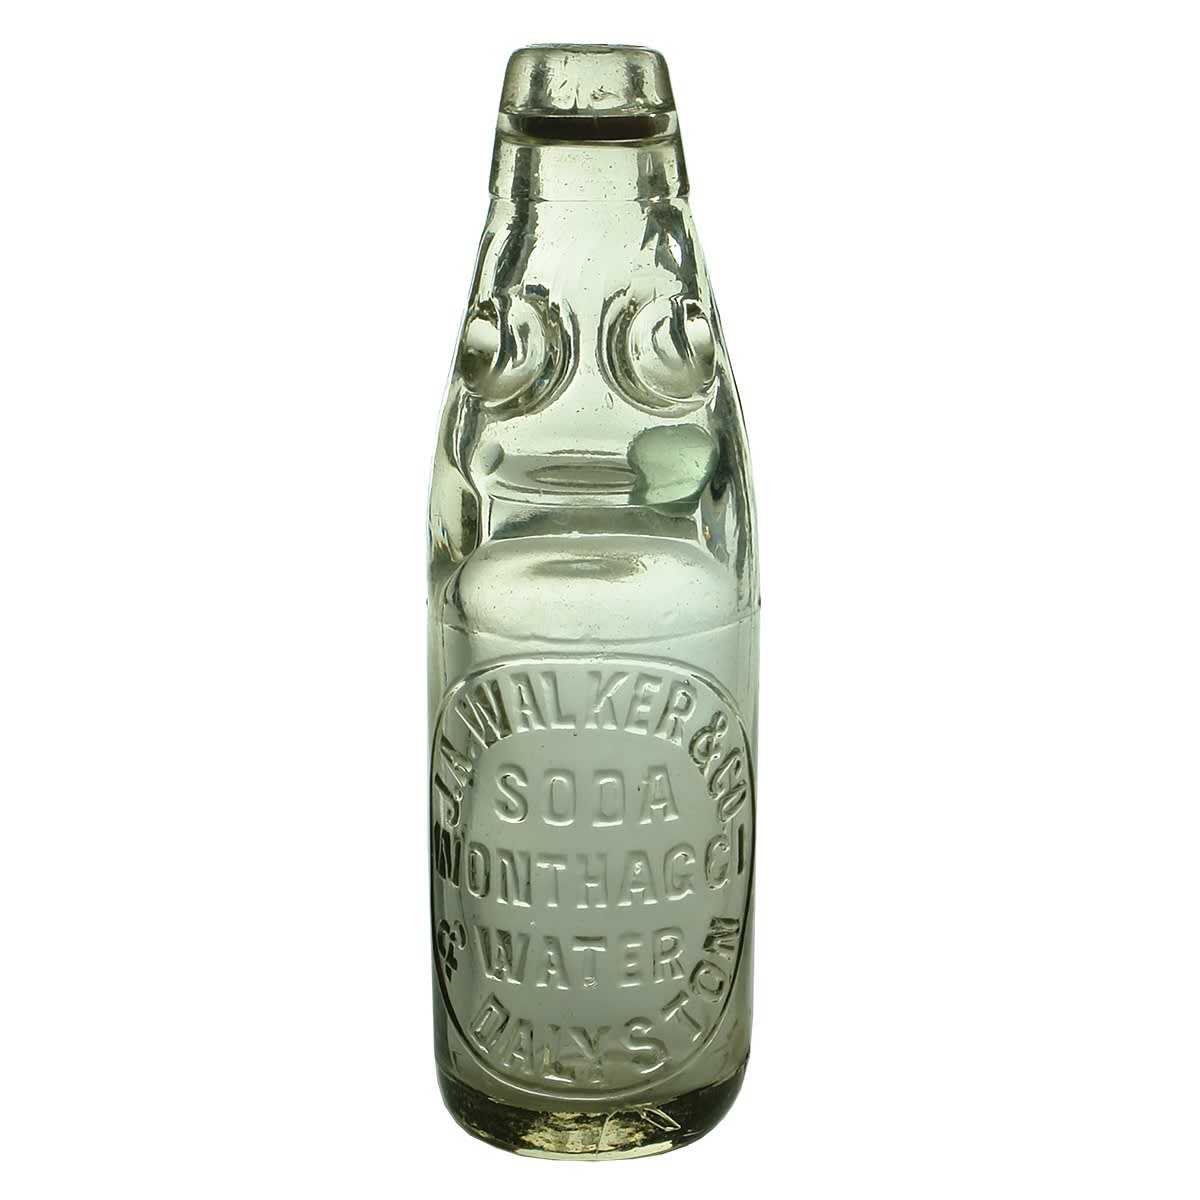 Codd. J. A. Walker & Co, Wonthaggi & Dalyston. Soda Water. Dobson. Clear. 6 oz. (Victoria)